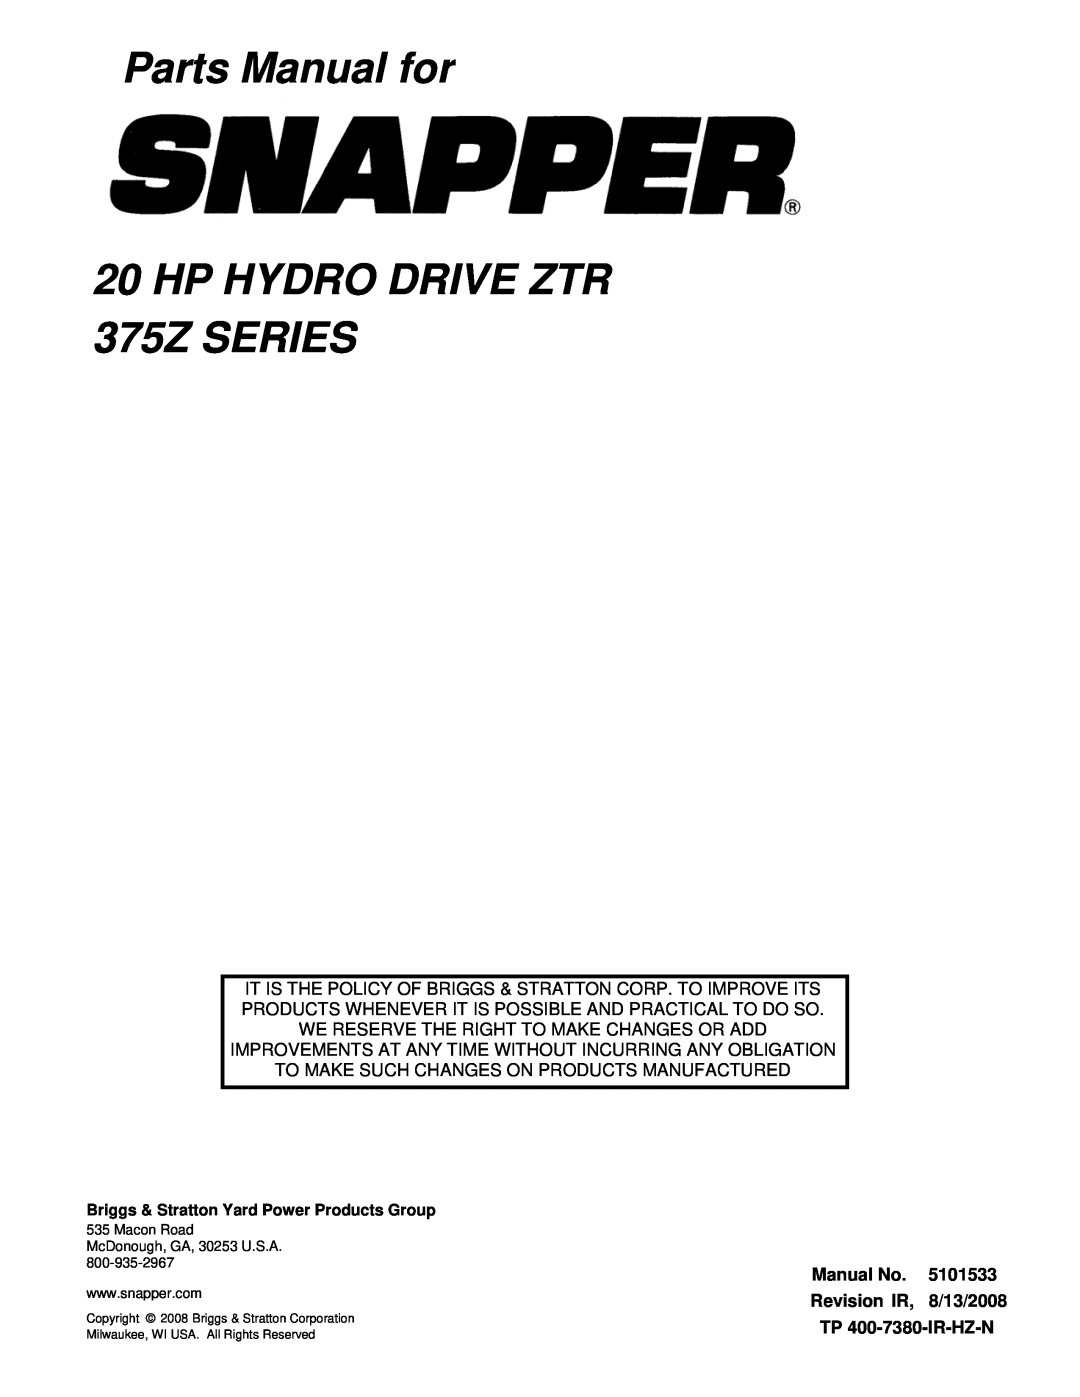 Snapper manual Parts Manual for 20 HP HYDRO DRIVE ZTR, 375Z SERIES, Manual No, 5101533, Revision IR, 8/13/2008 